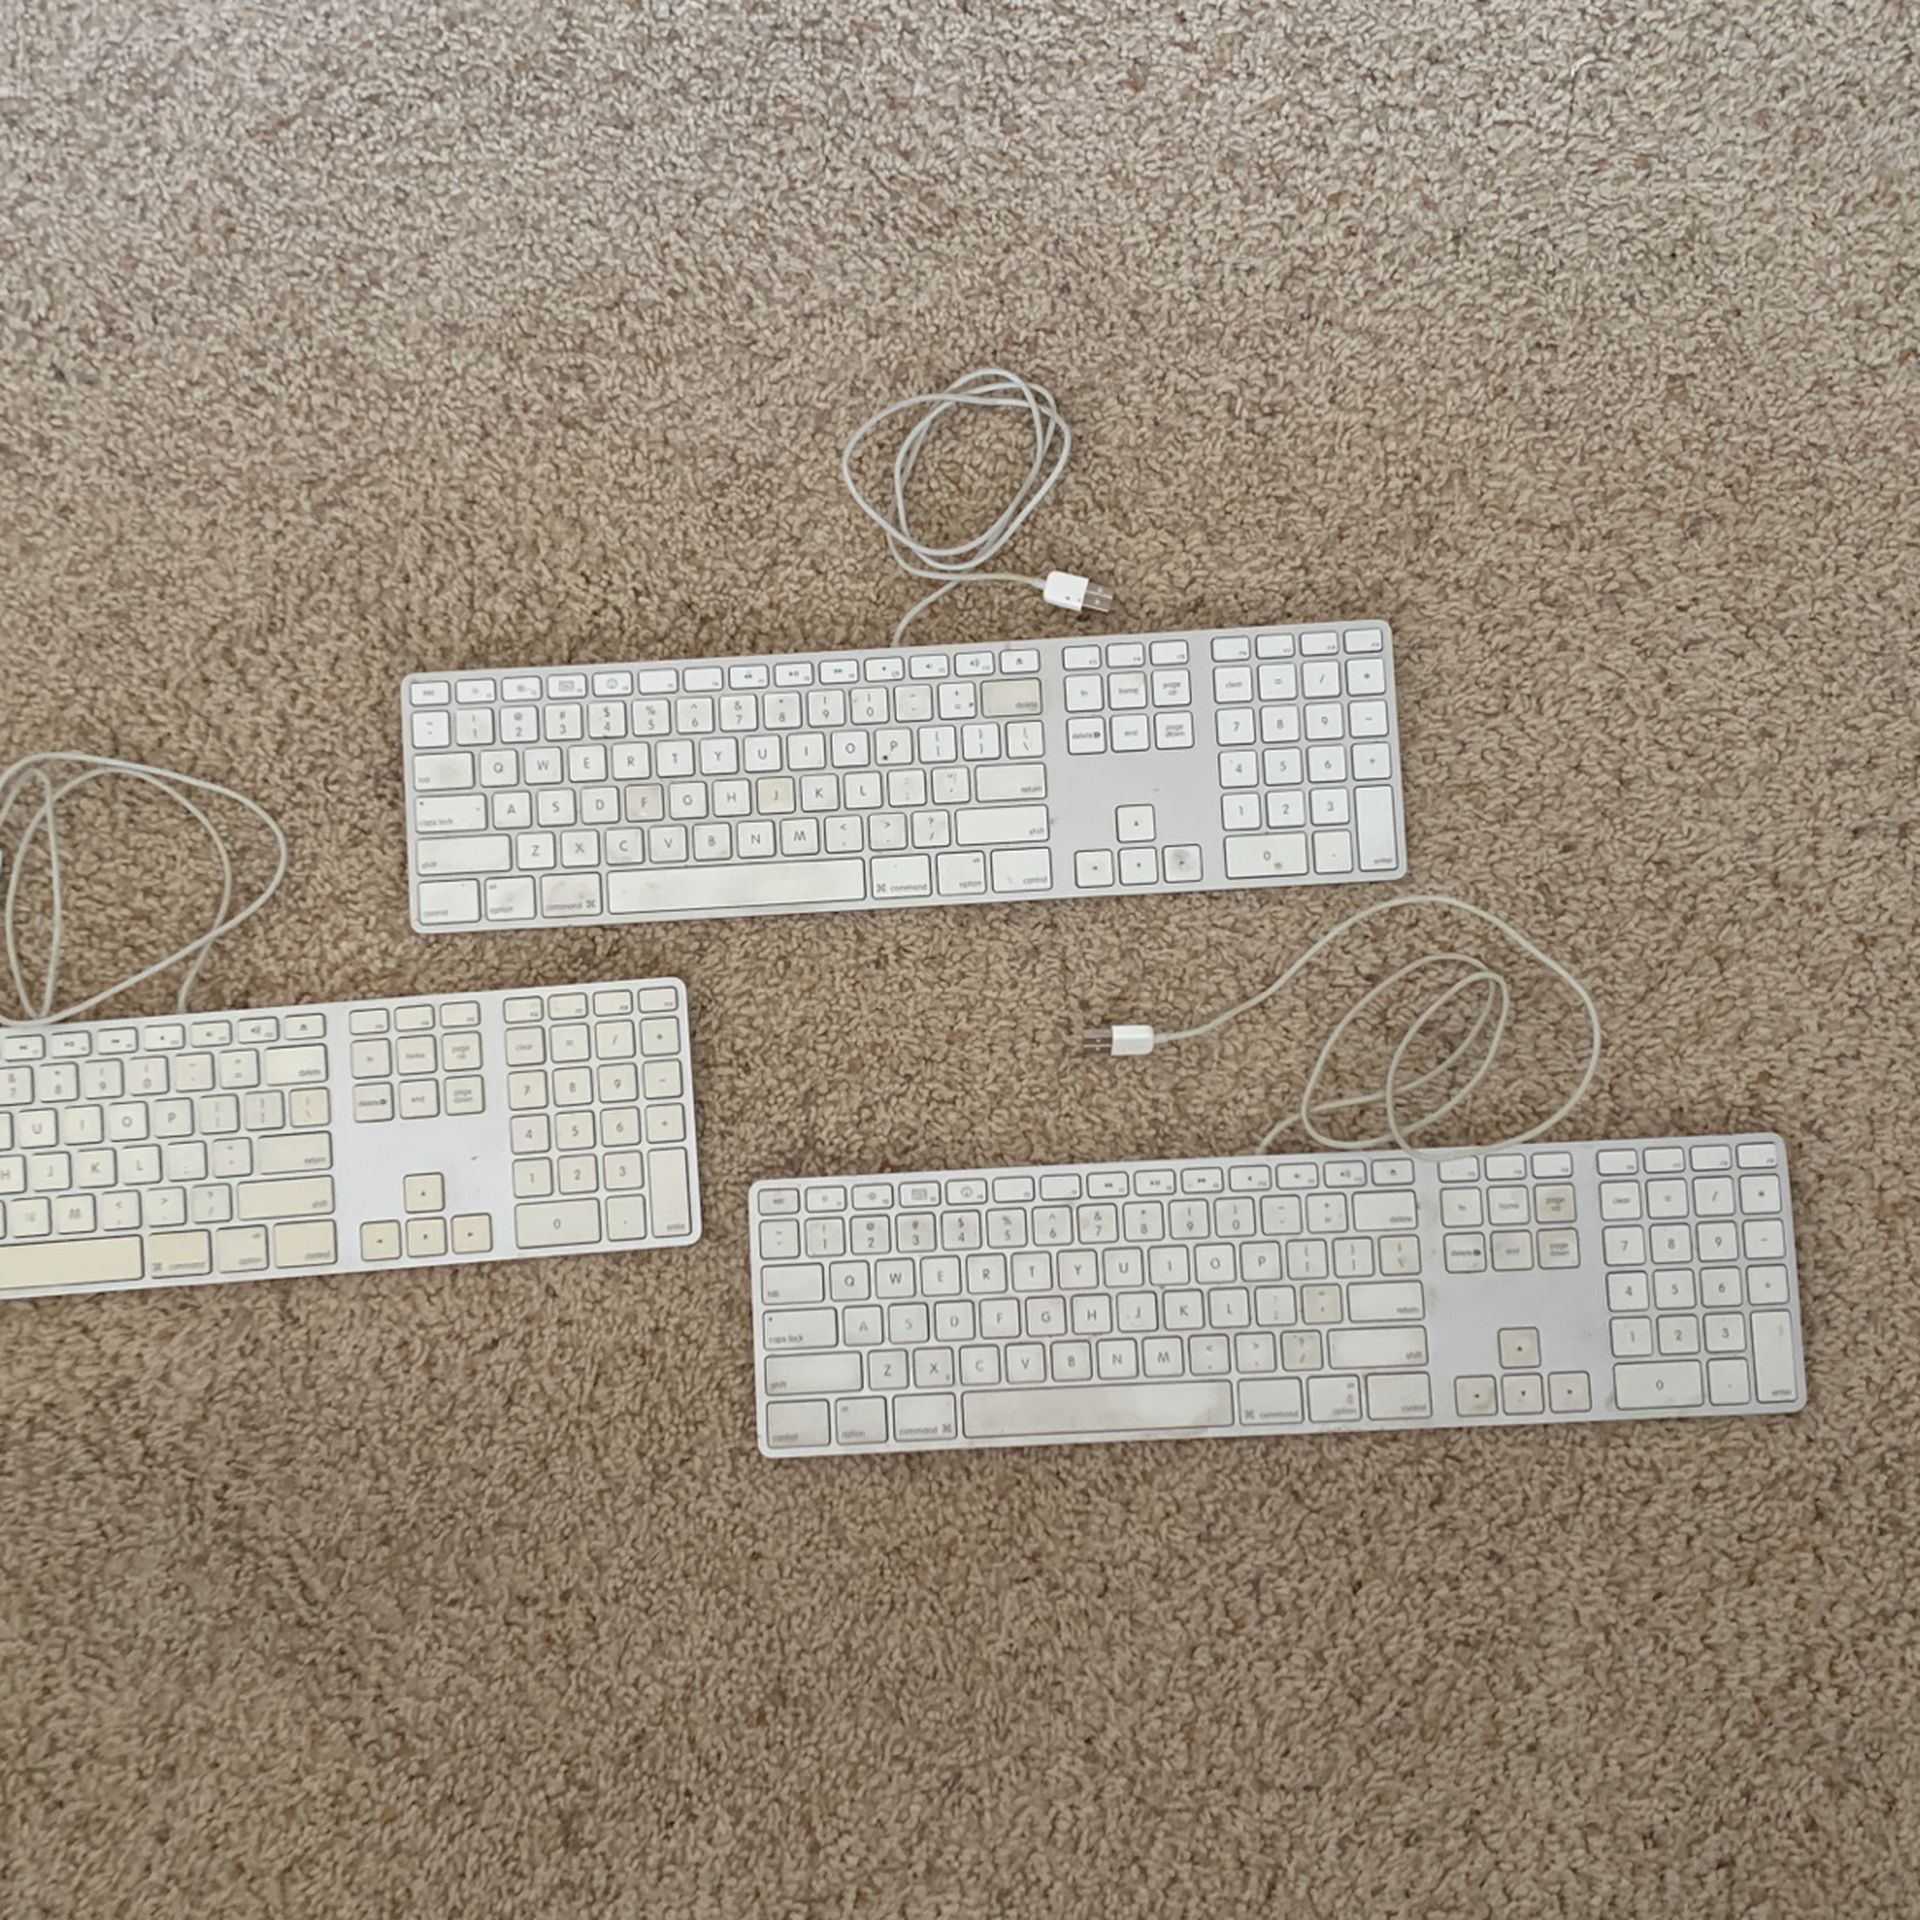 Mac Keyboards With Numeric Keypad 